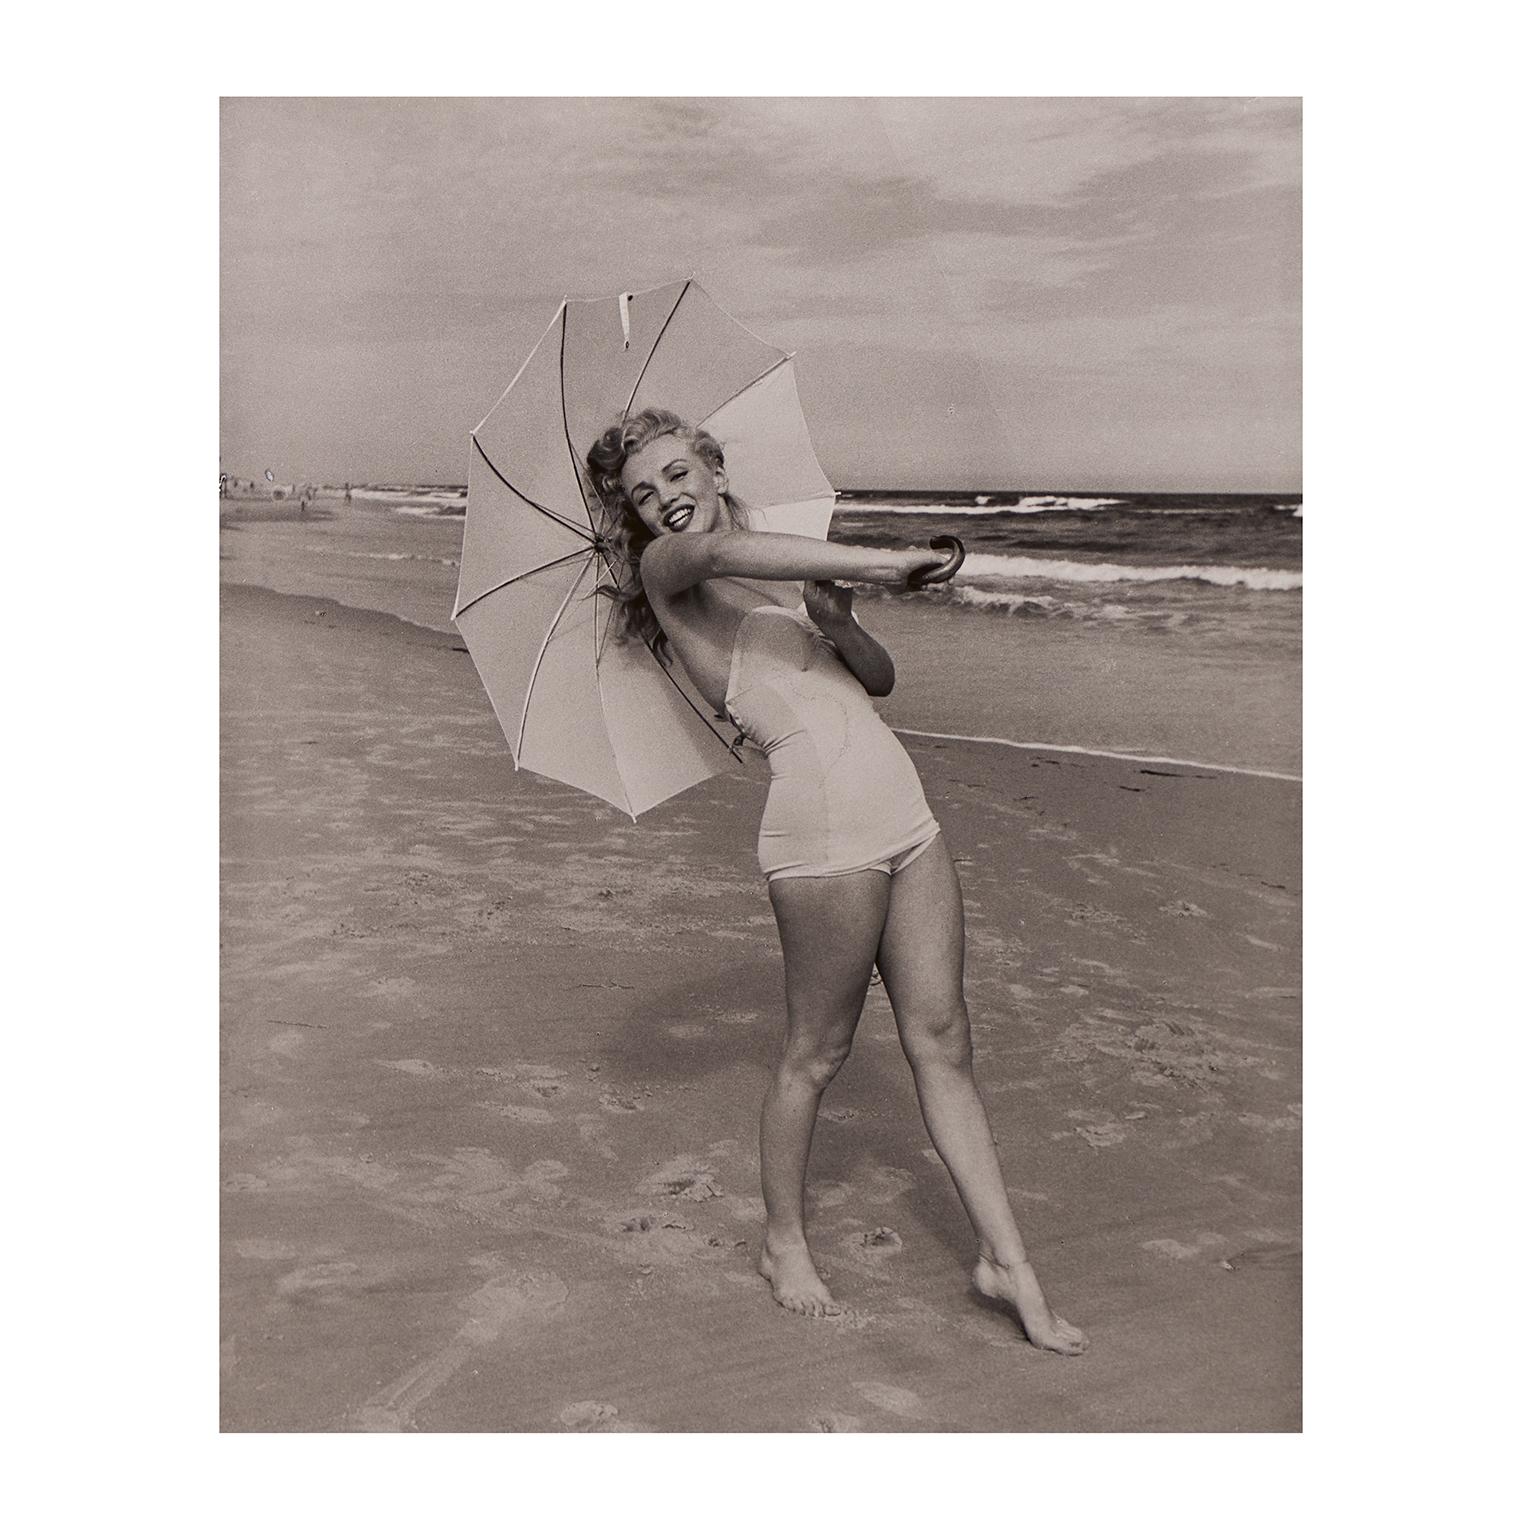 Andre de Dienes Portrait Print - Marilyn Monroe 'Umbrella Girl on Beach' by André de Dienes - Black and White